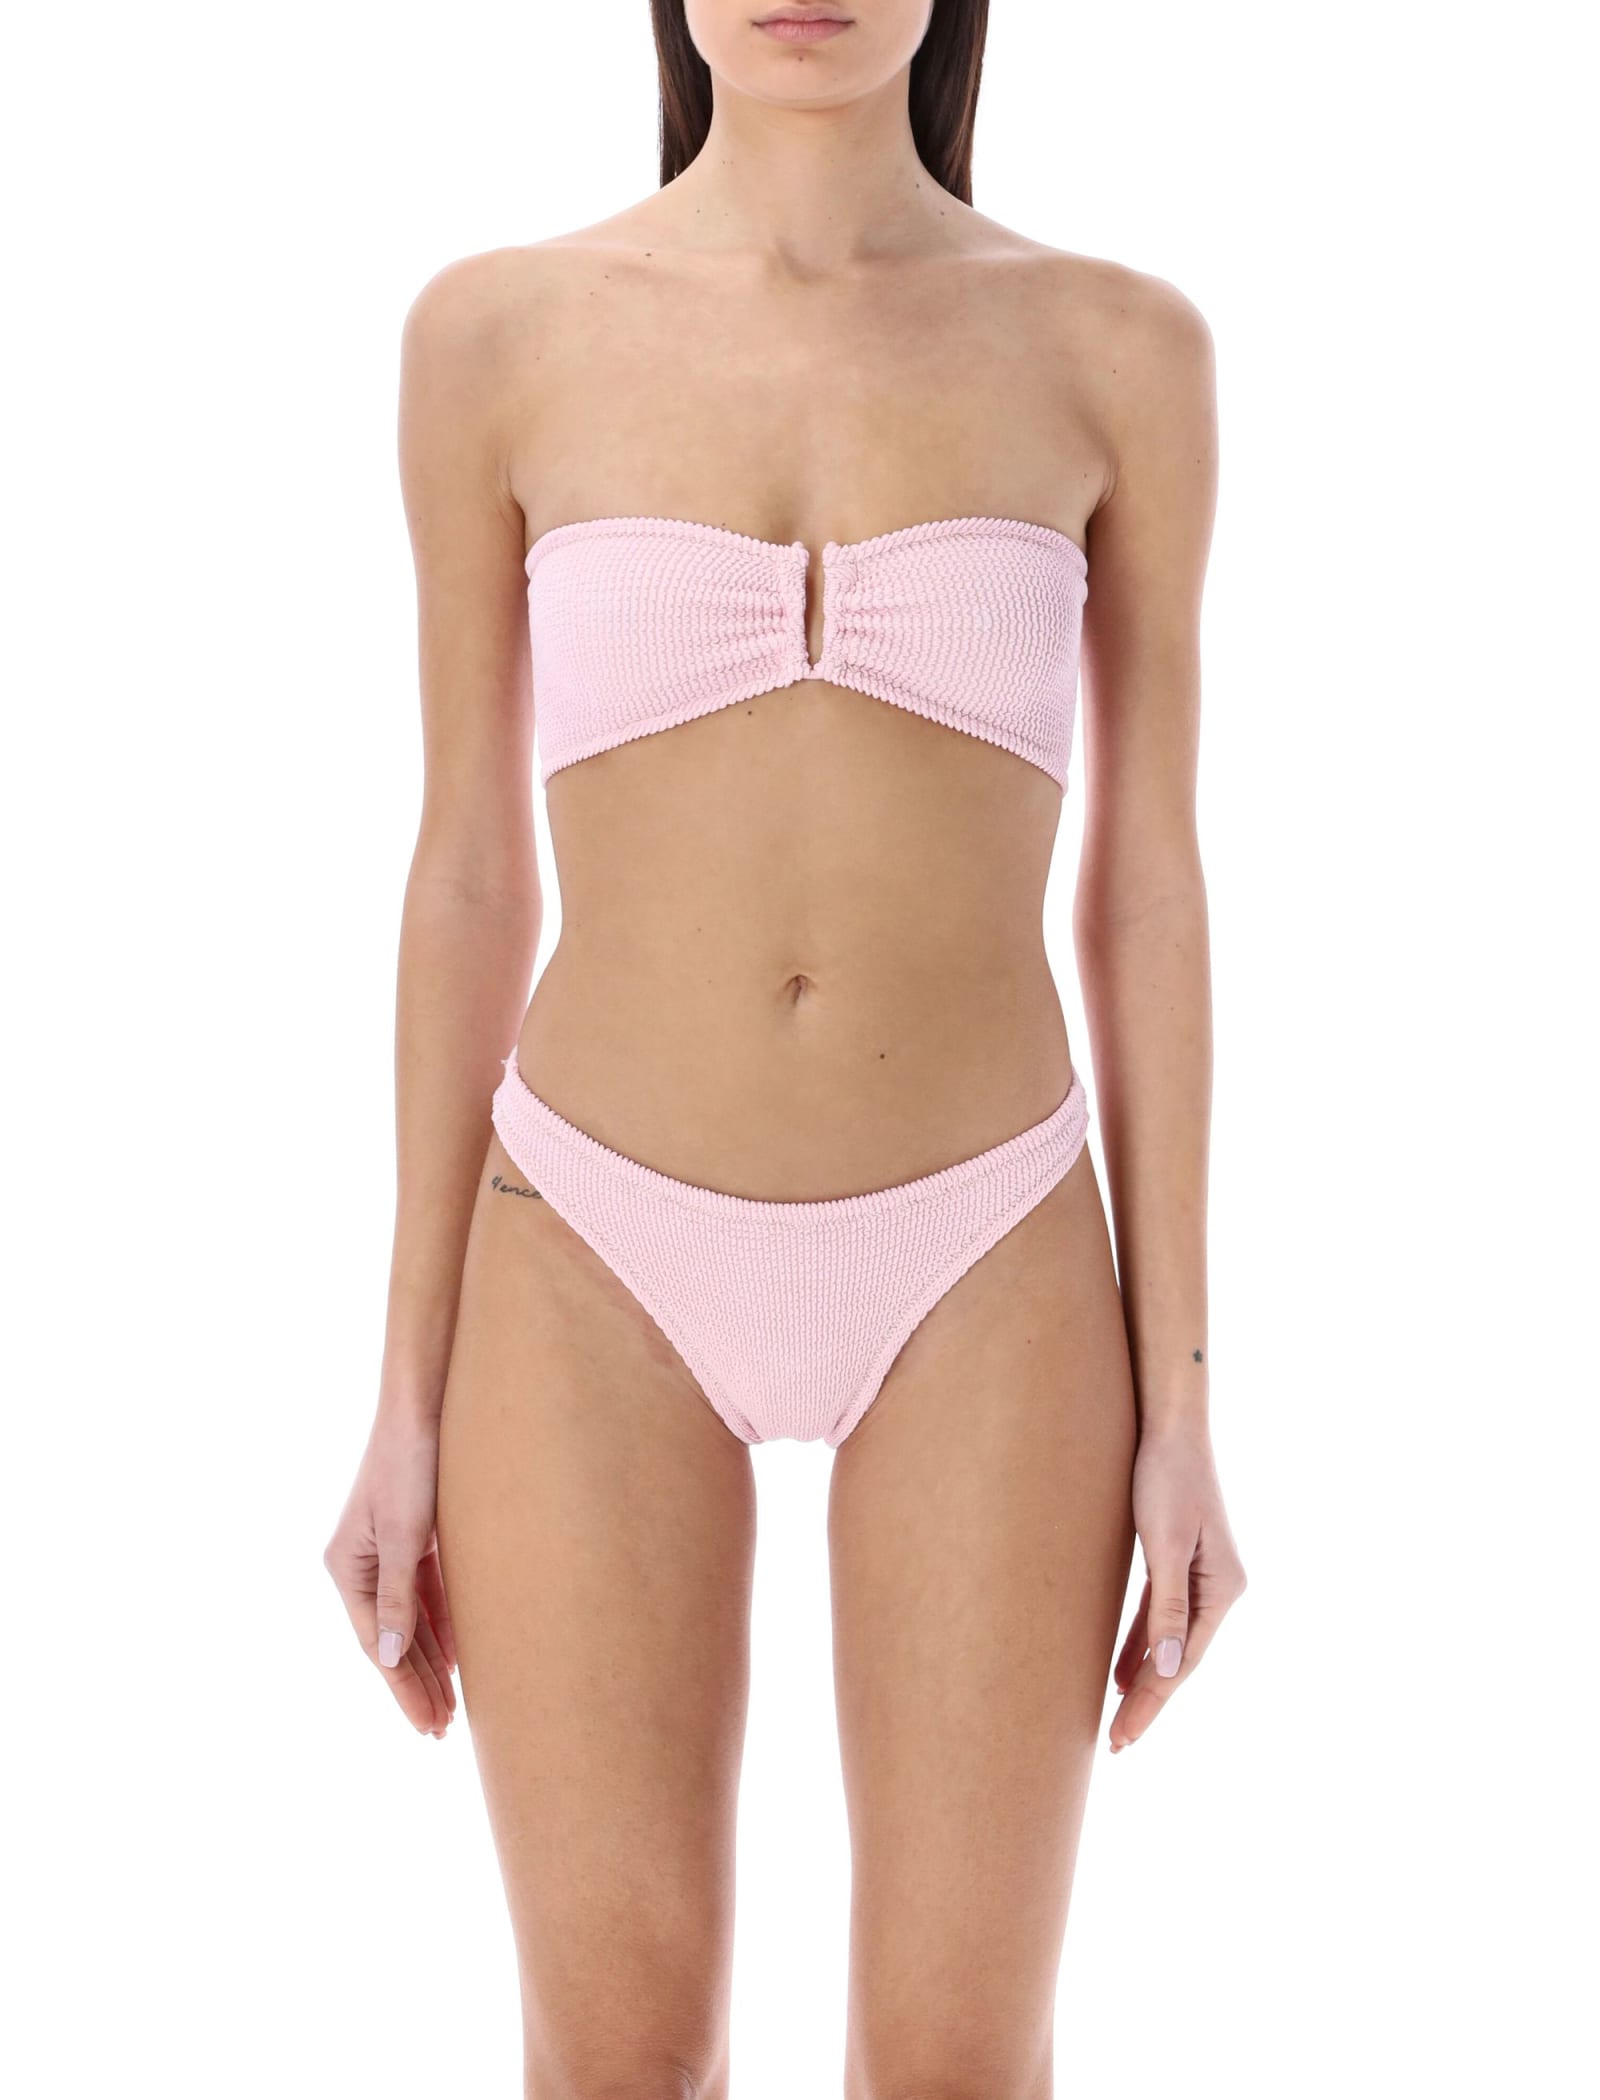 Reina Olga Ausilia Scrunch Bikini Set - 0BABY PINK - female - Size: 0one size